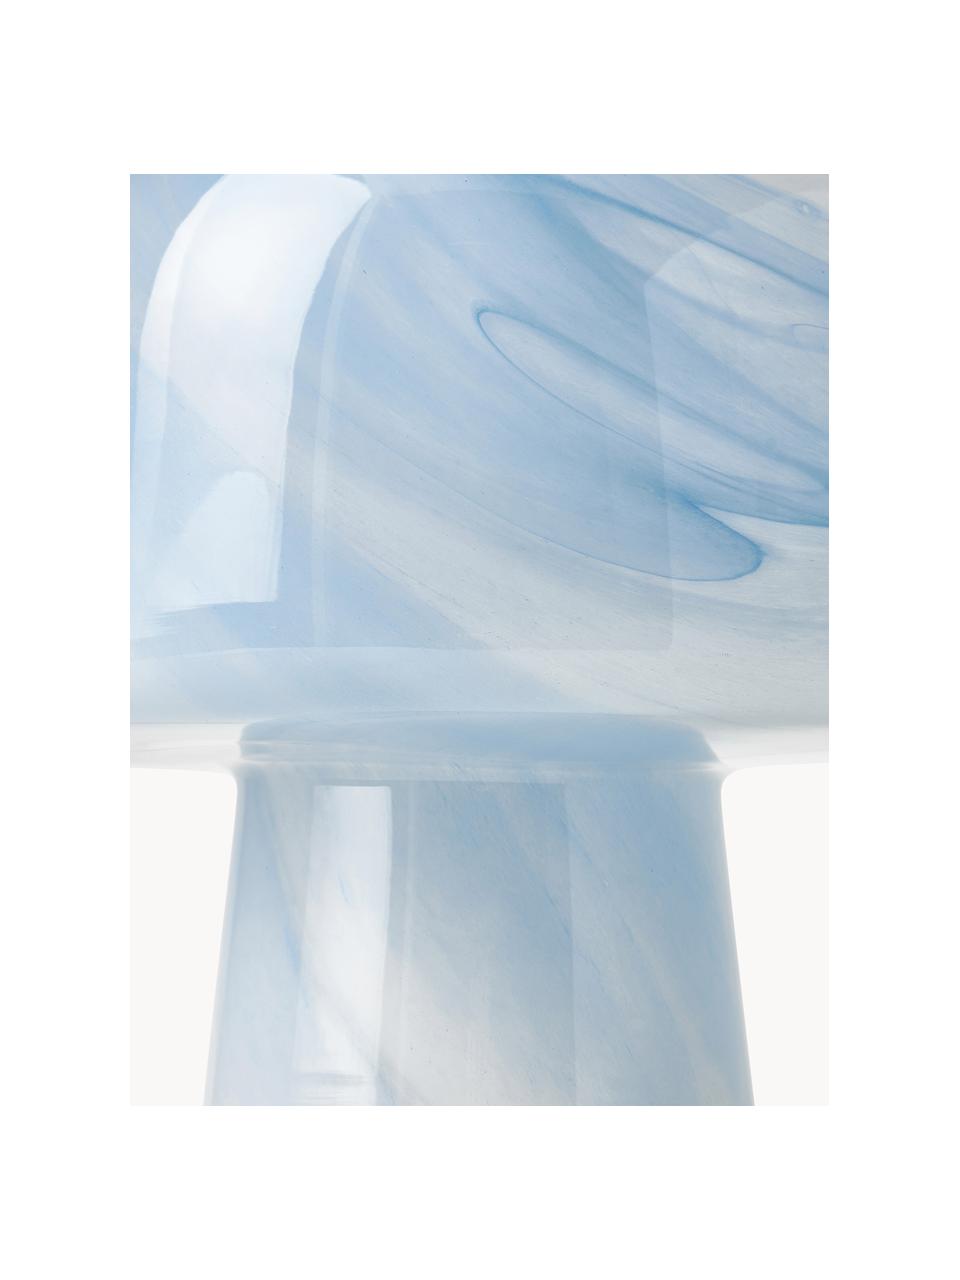 Petite lampe à poser aspect marbre Talia, Aspect marbre bleu ciel, Ø 20 x haut. 26 cm